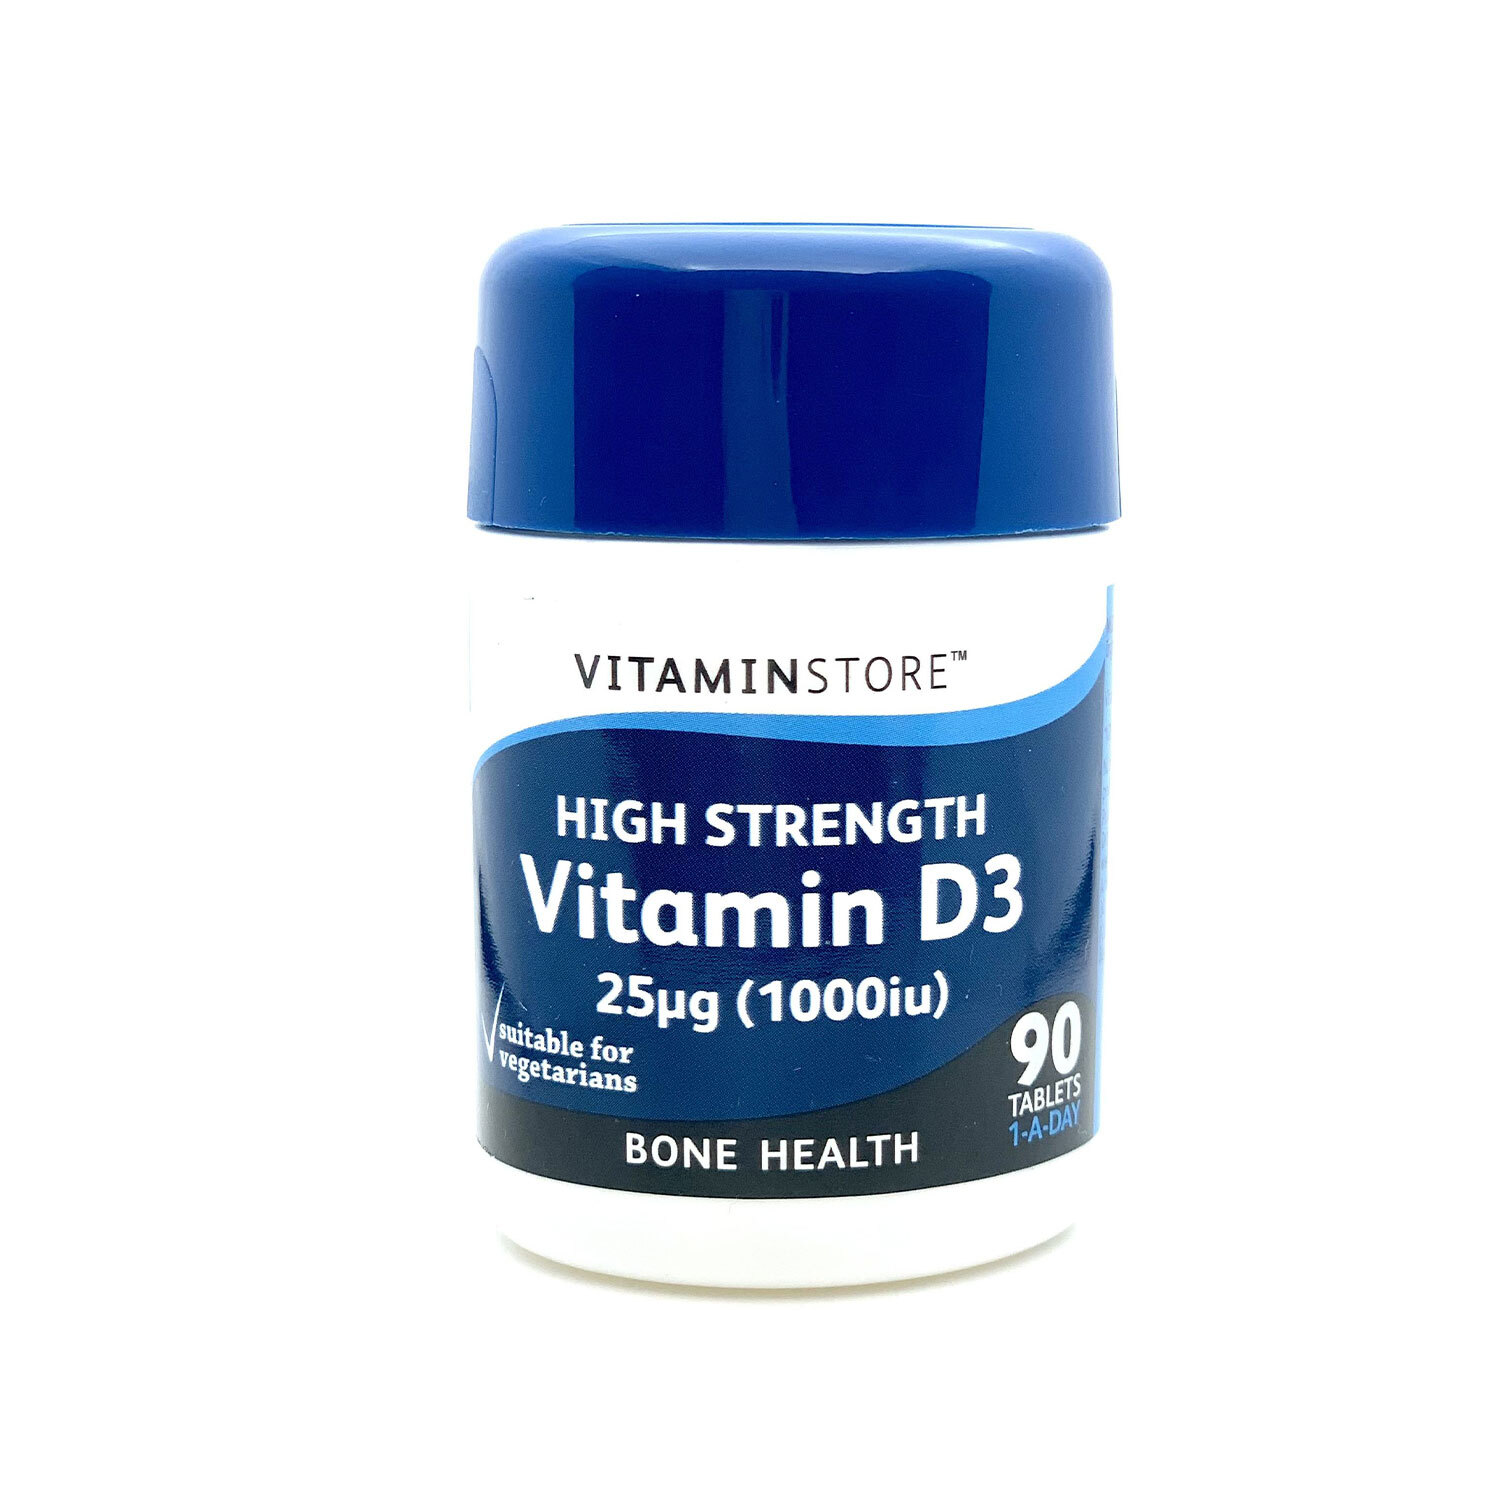 High Strength Vitamin D3 Image